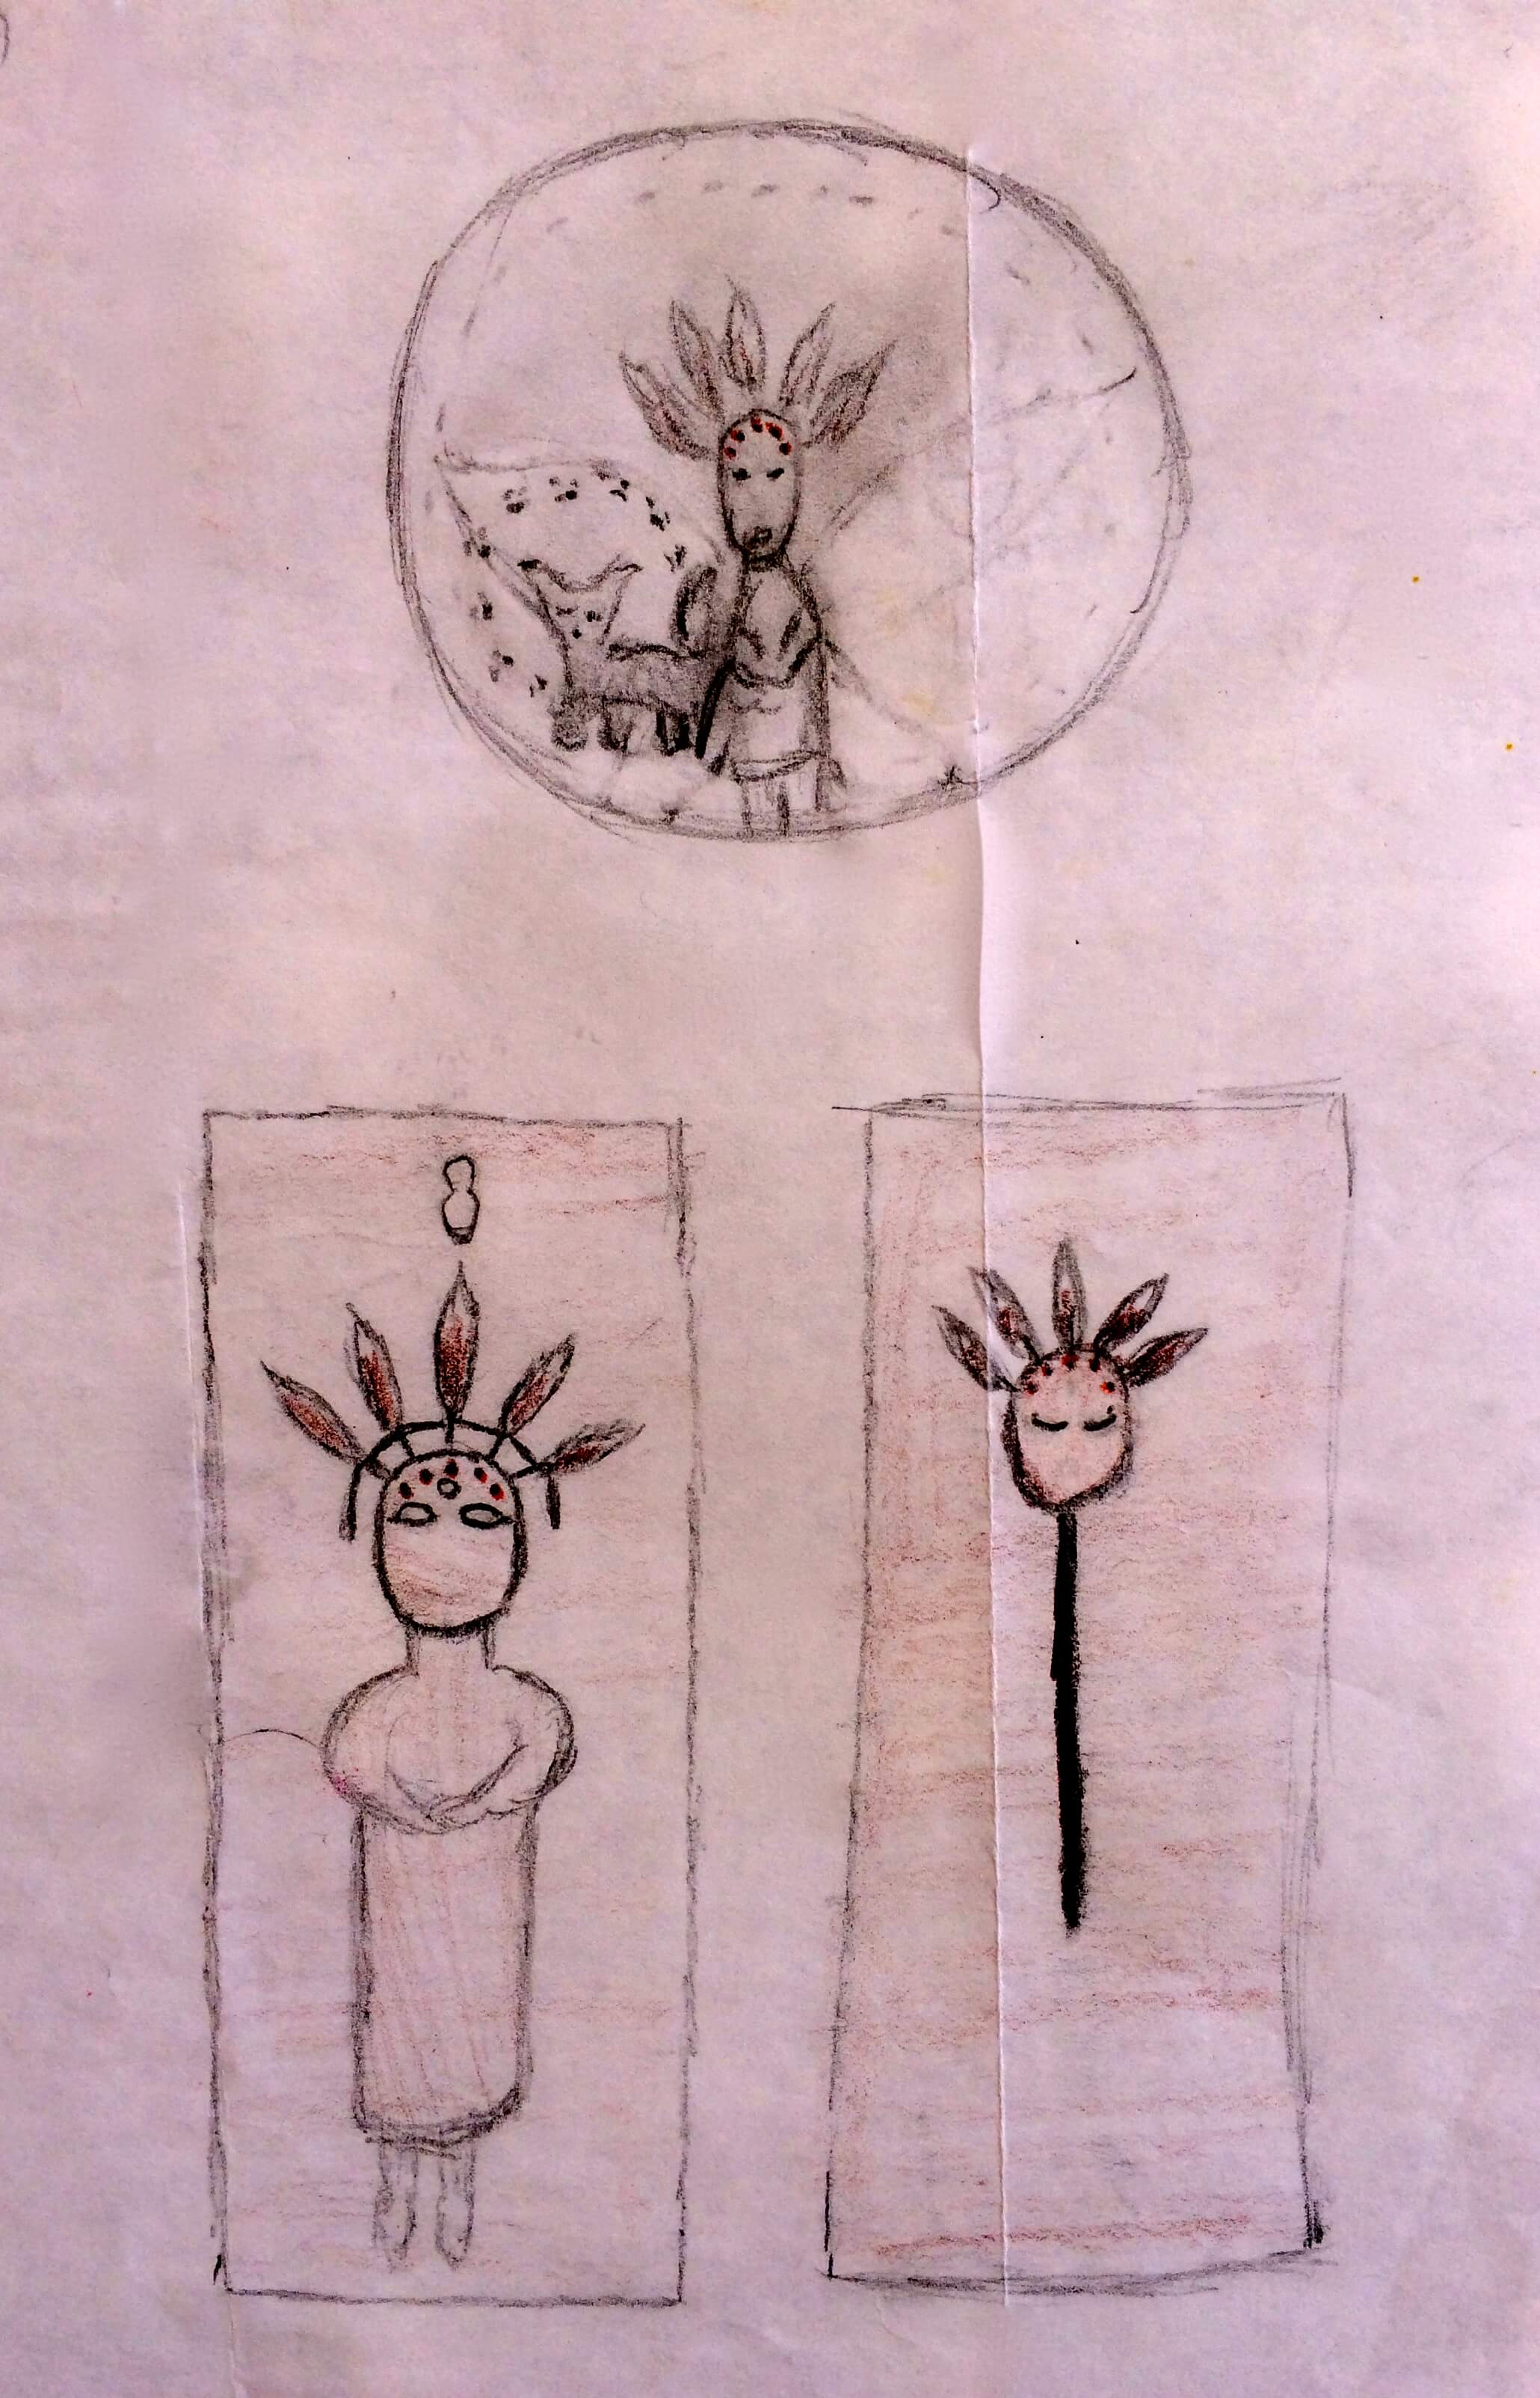 Pipiisiiq's drawings